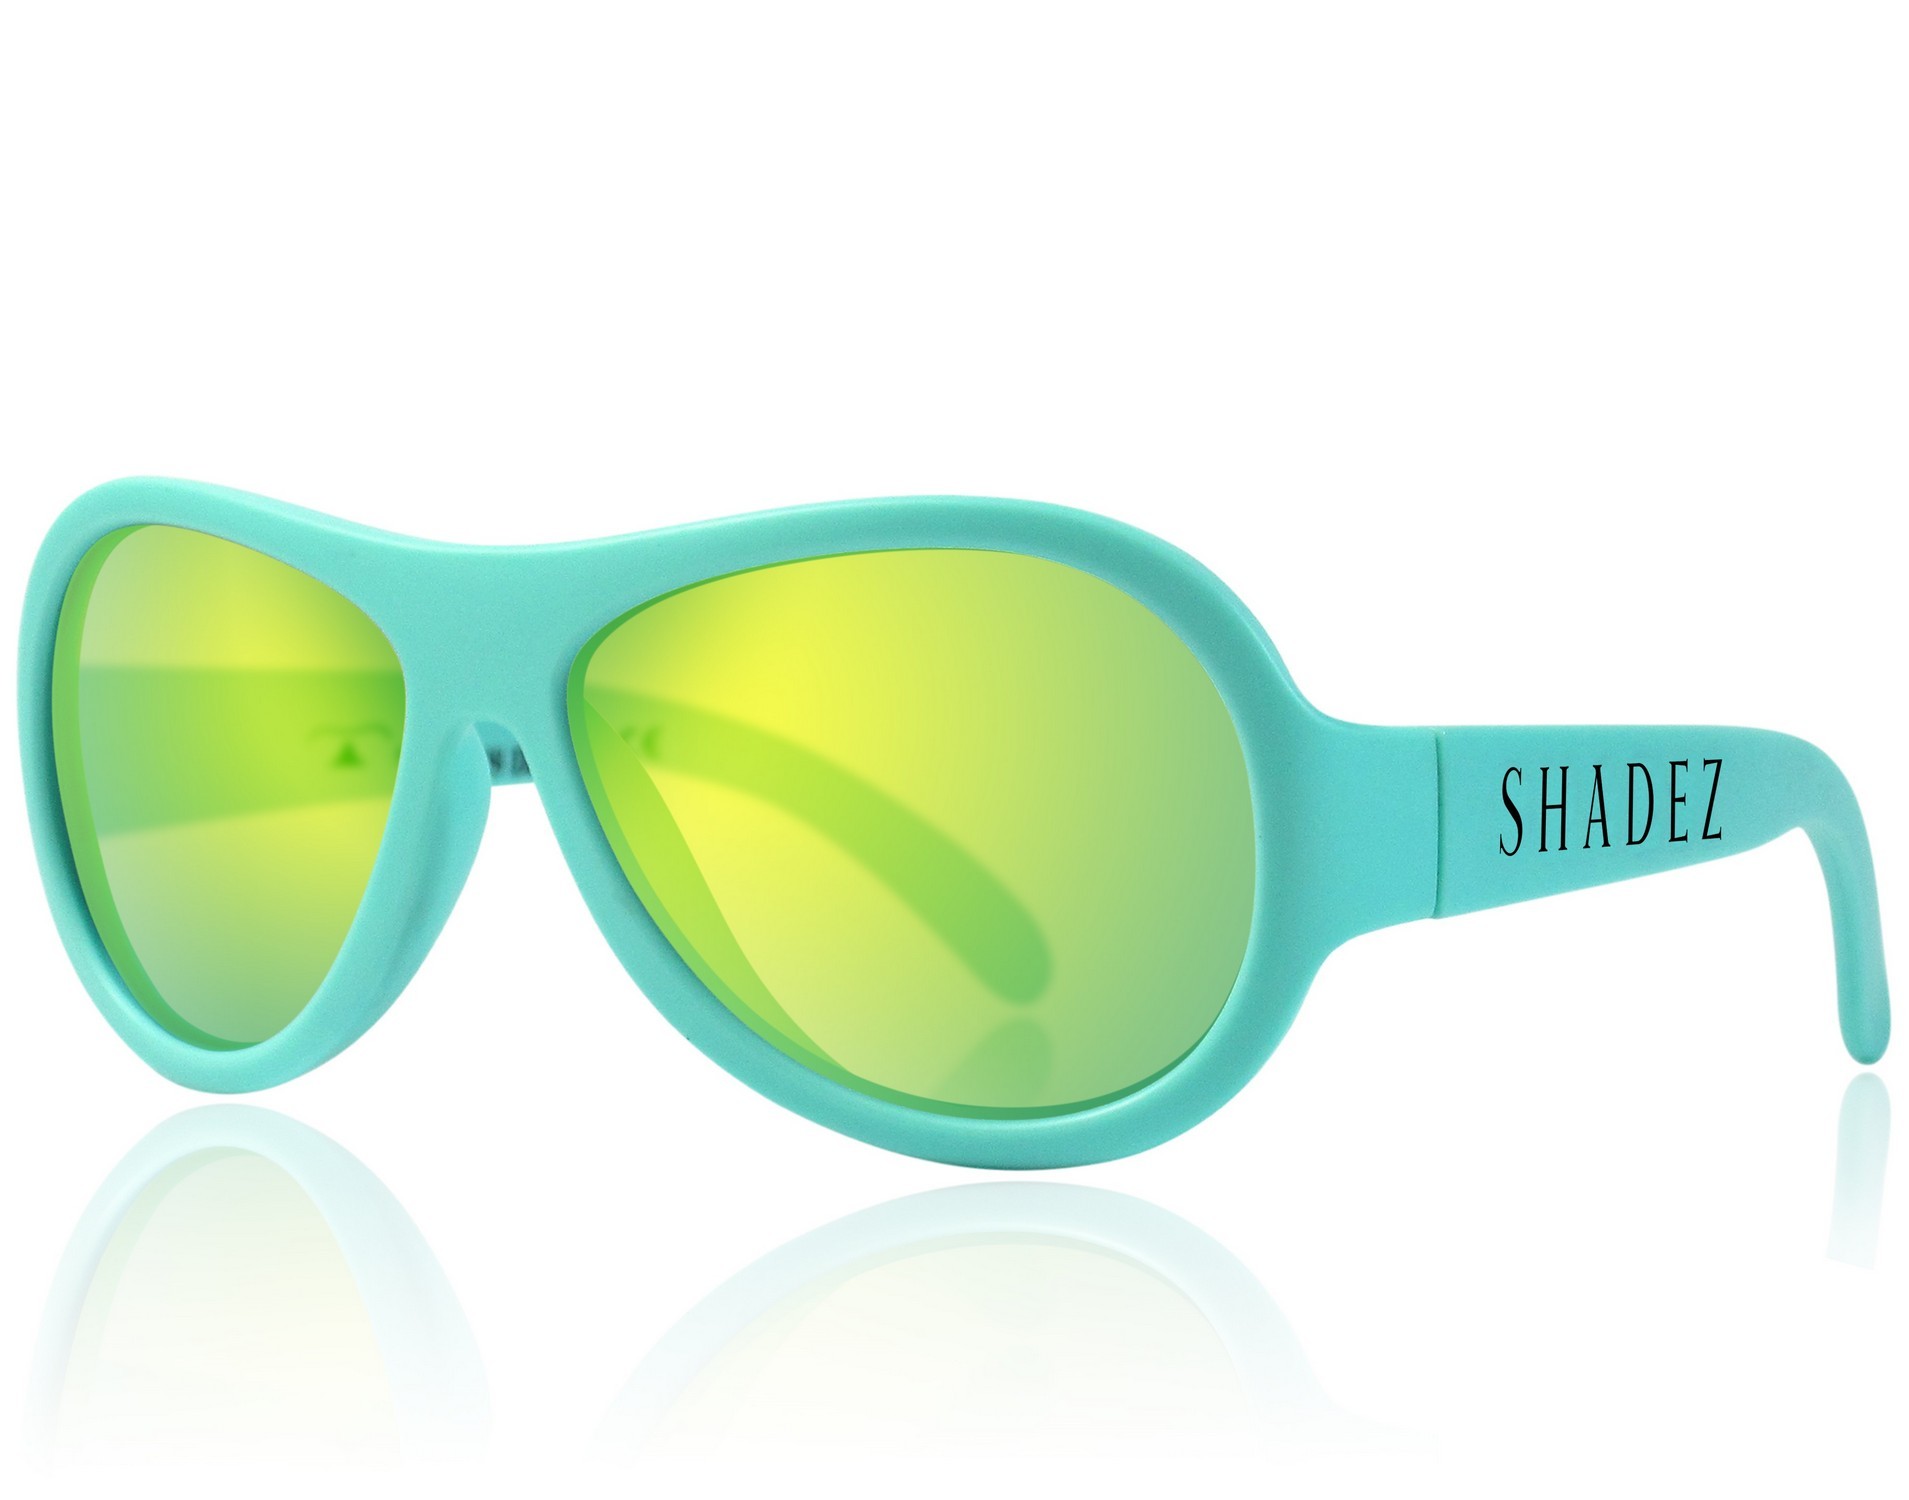 Shadez - UV sunglasses for kids - Classics - Turquoise